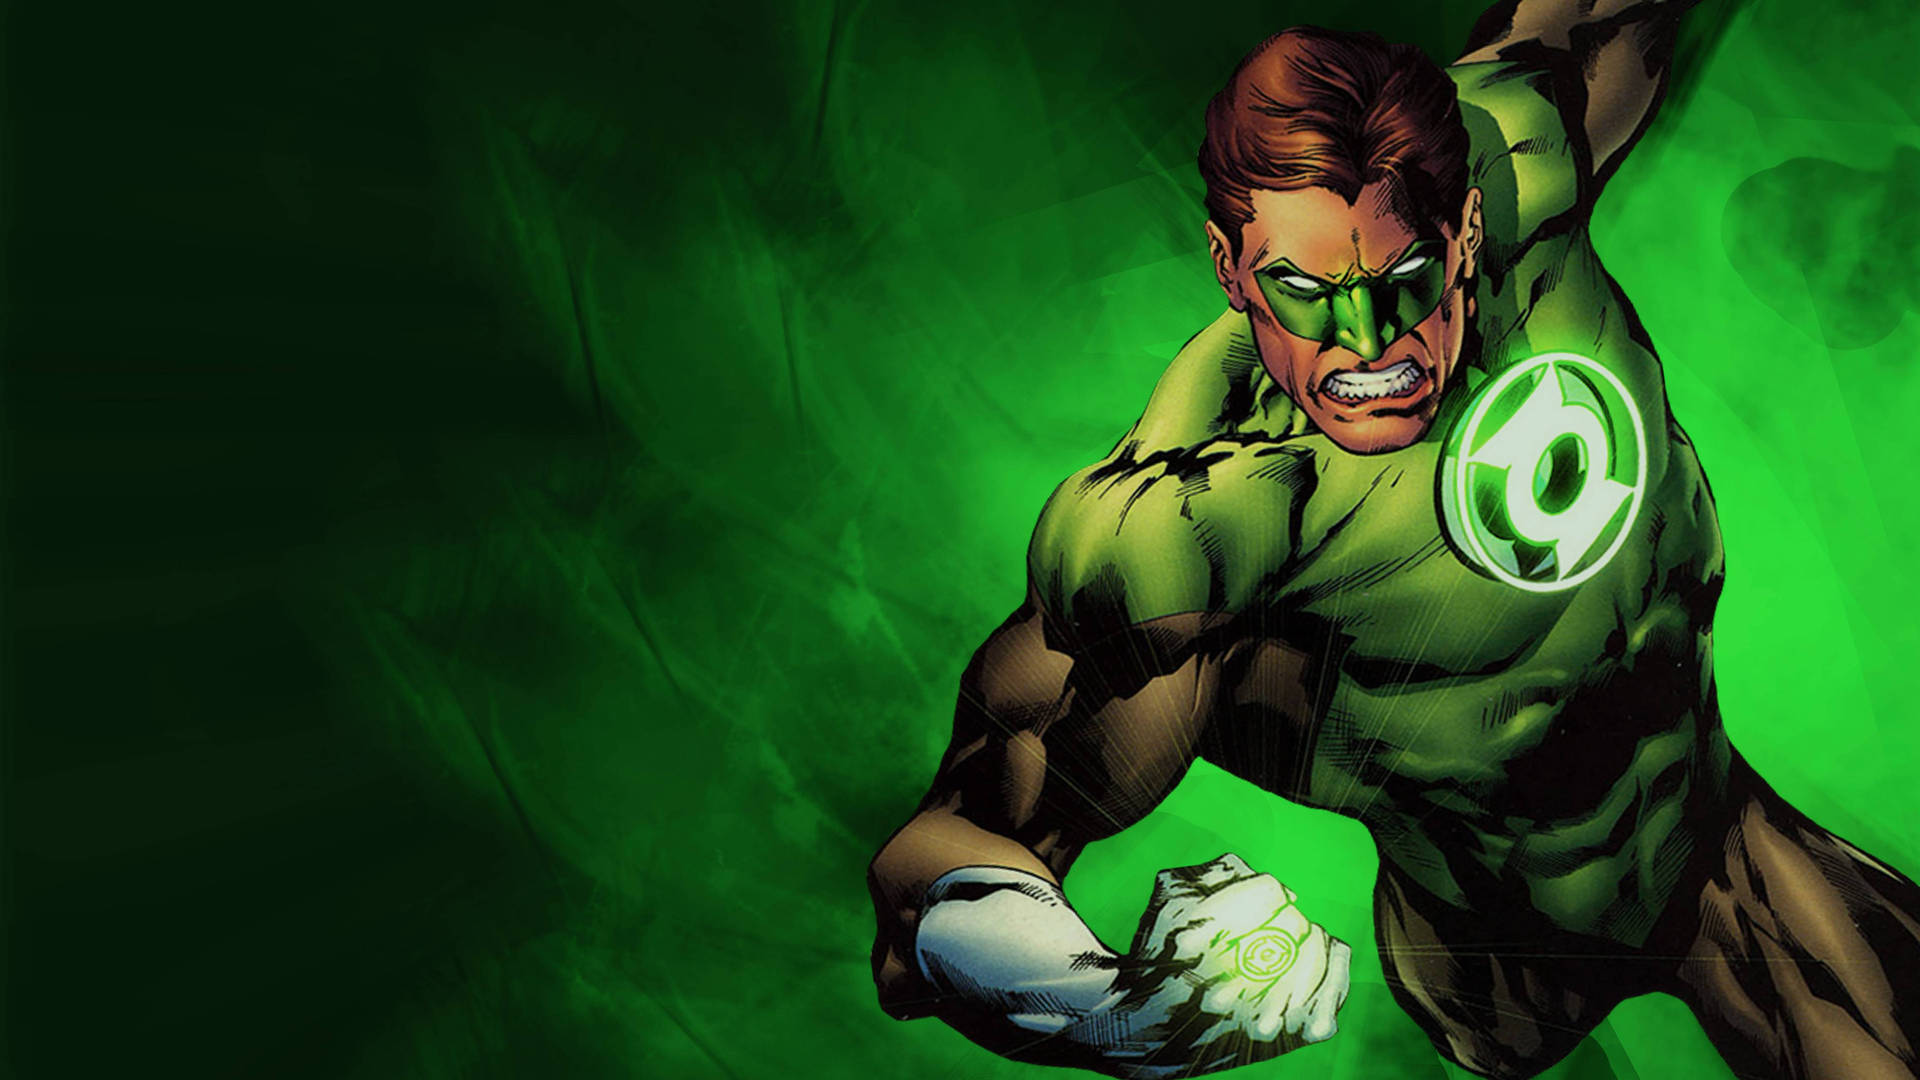 "The Green Lantern - Defender of Justice!" Wallpaper